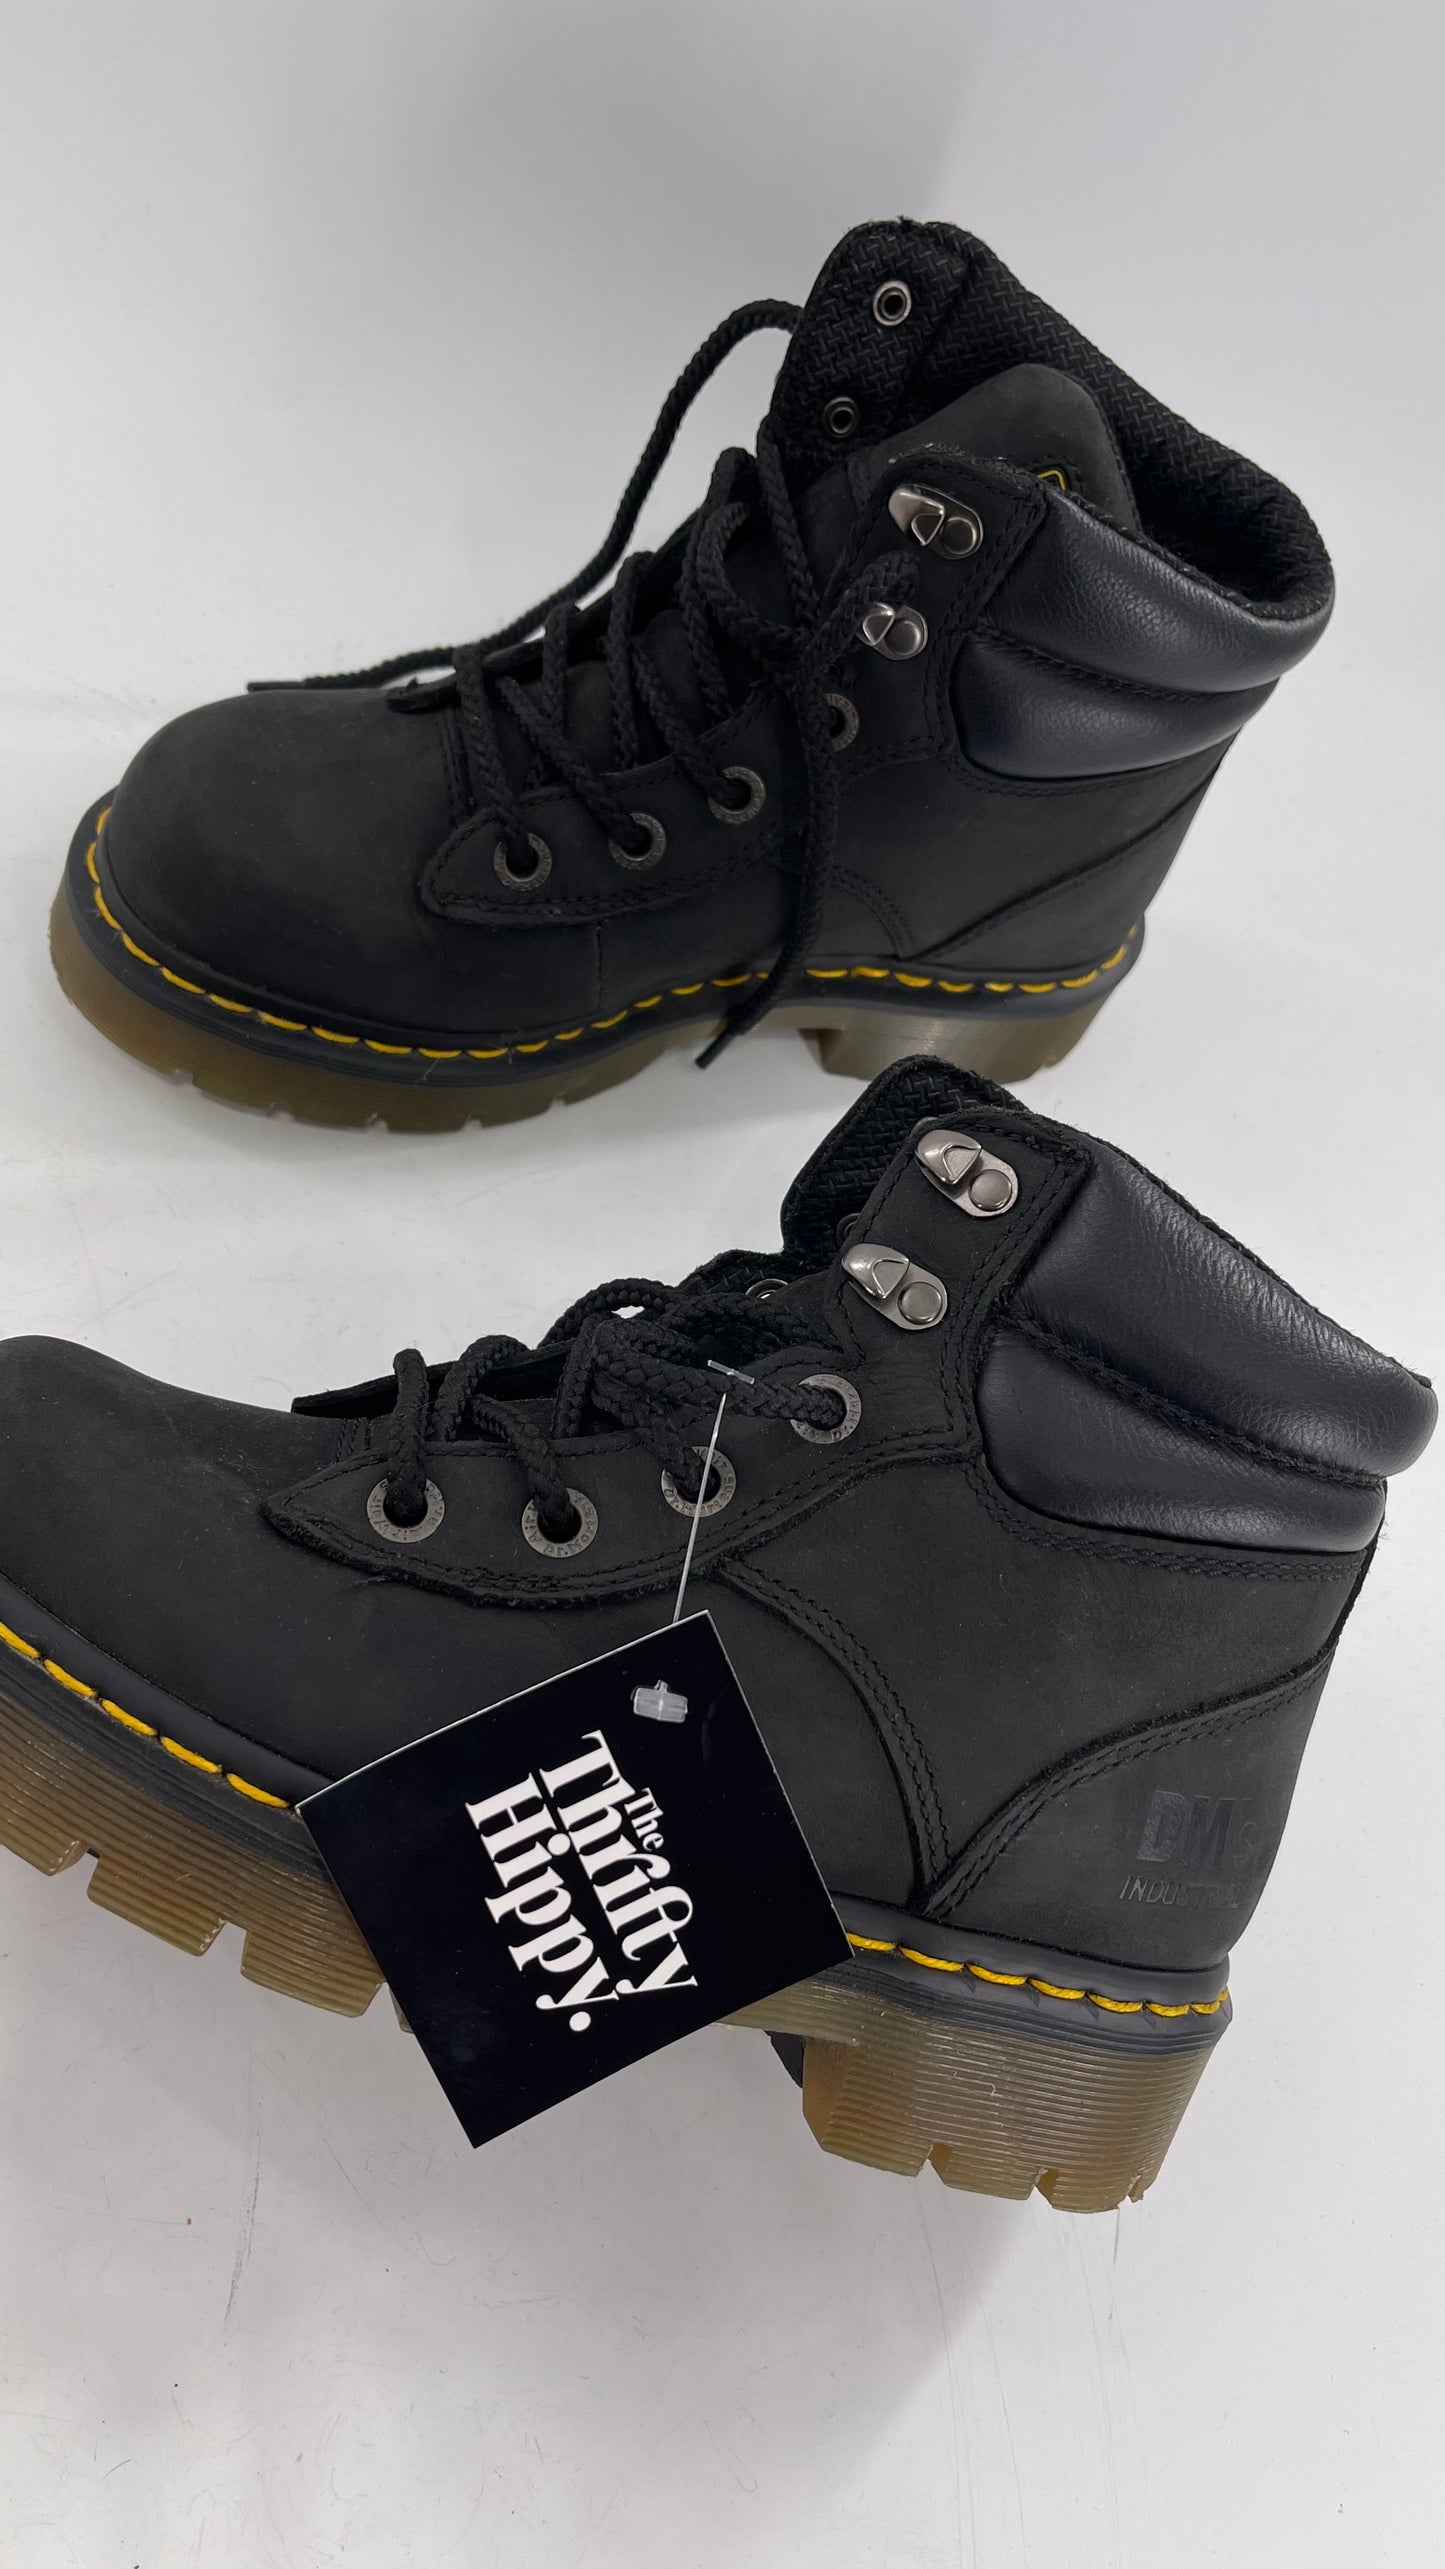 Doc Martens Industrial Black Combat Boots (6)